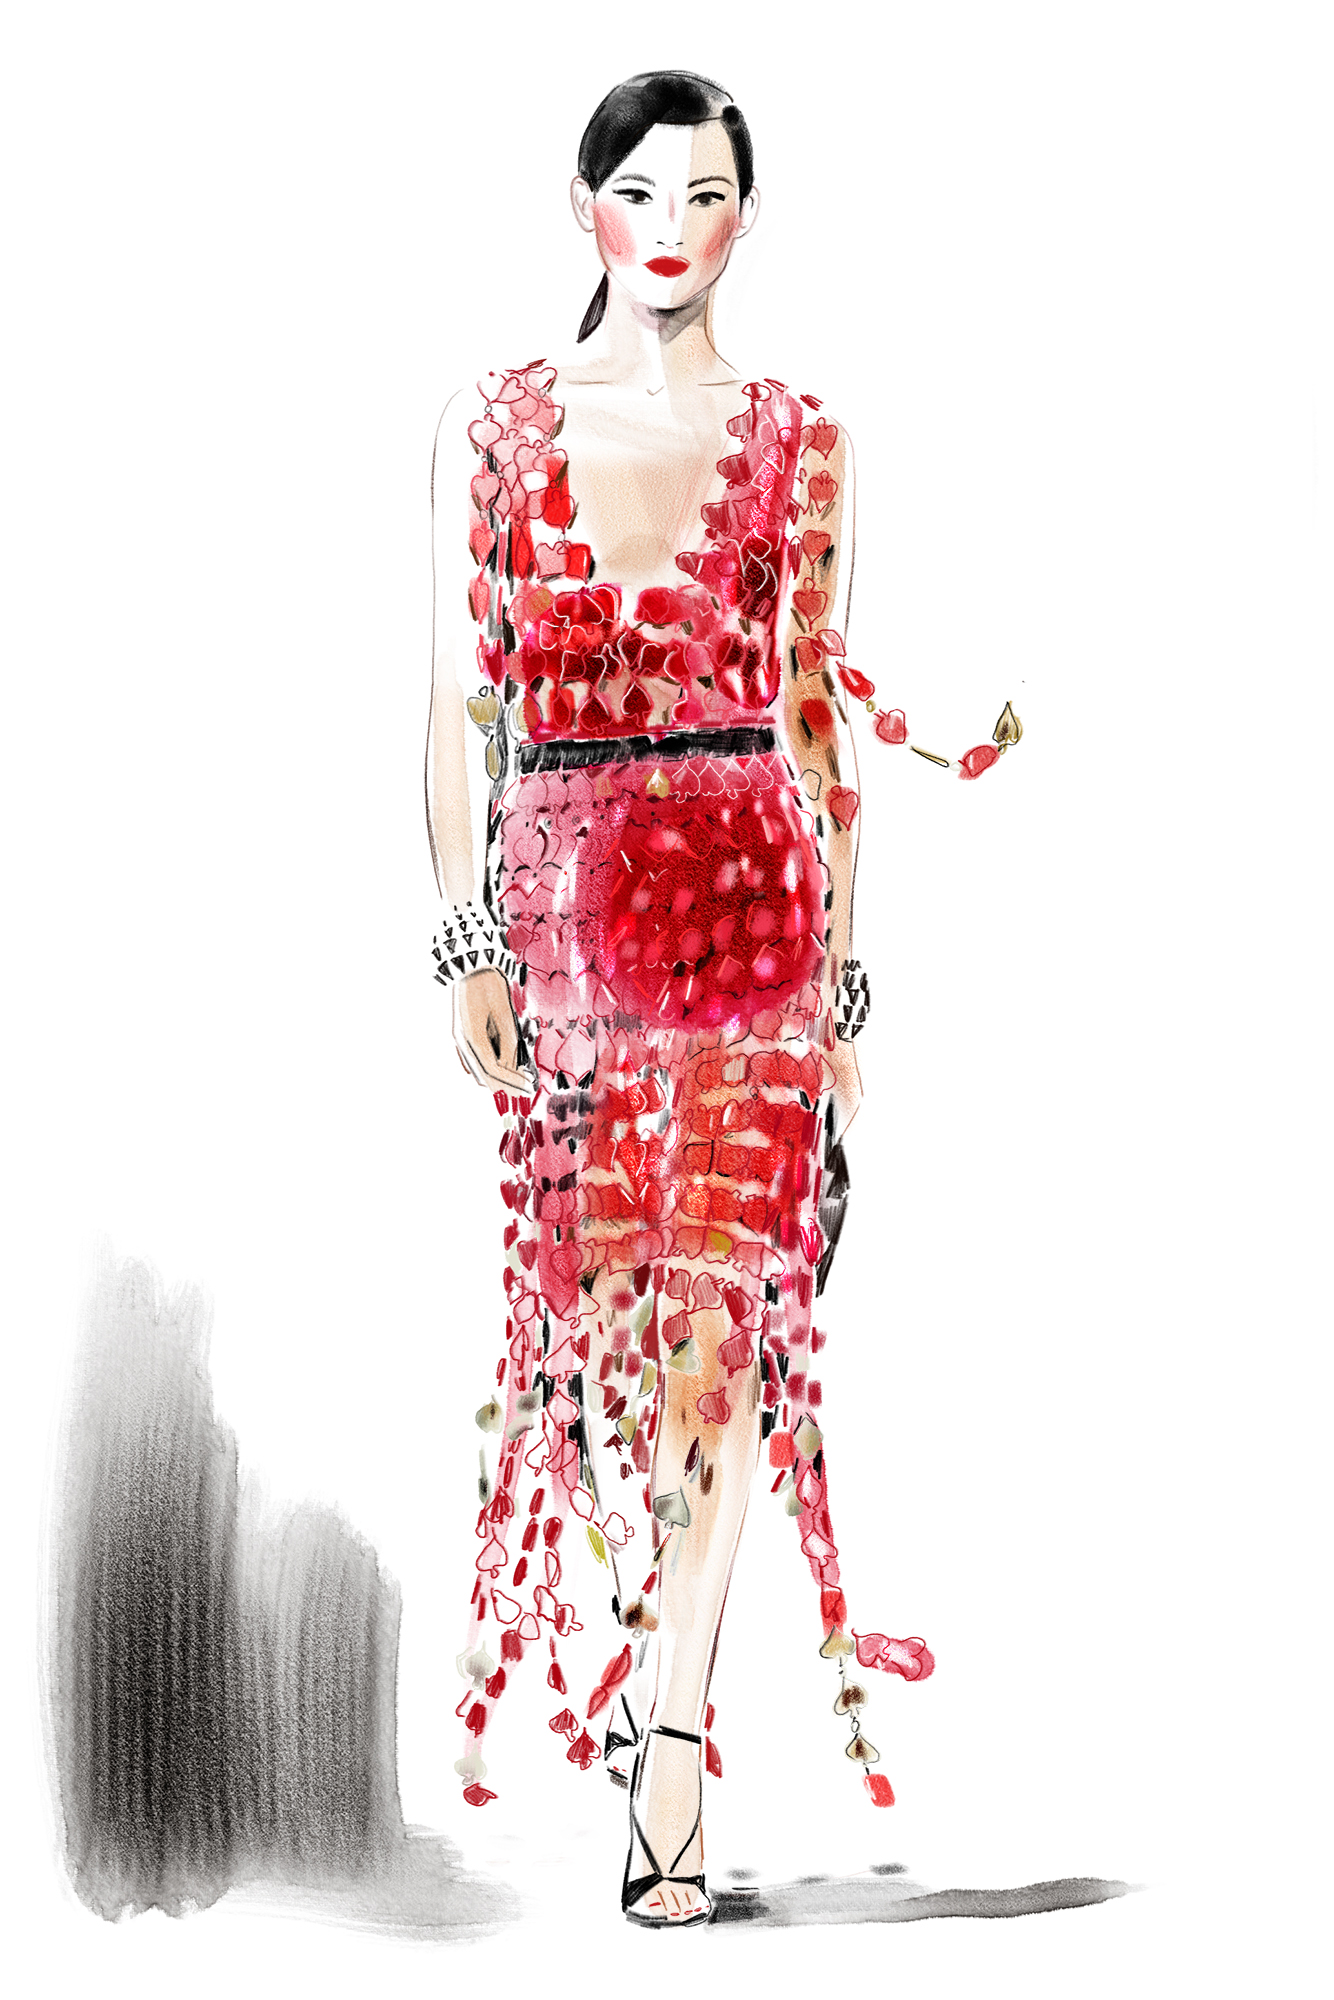 Lanvin+illustrated+fashion+Lucy+truman+Fashion+show+illustration+live+illustrator